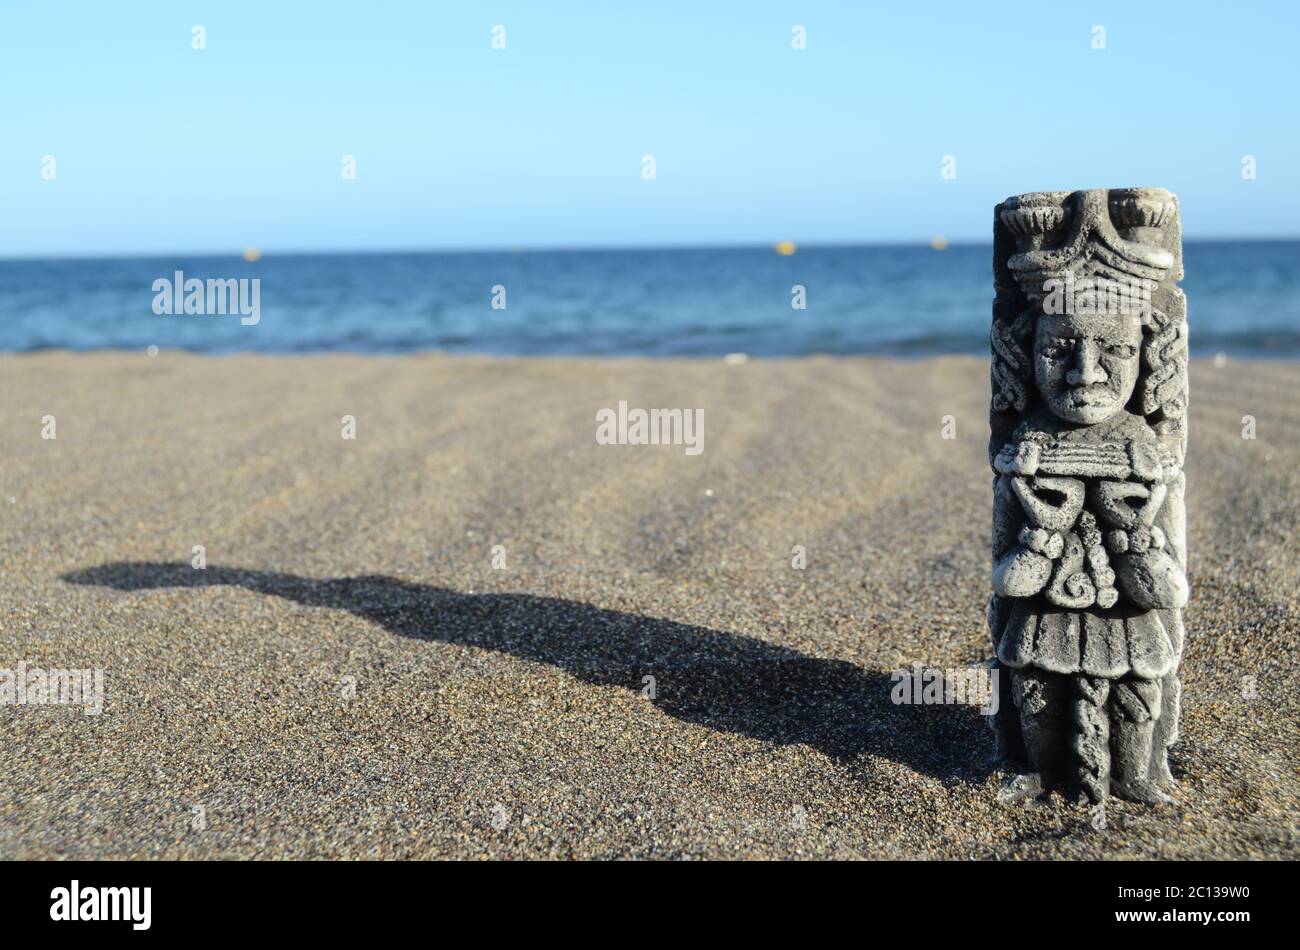 Ancient Maya Statue on the Sand Beach Stock Photo